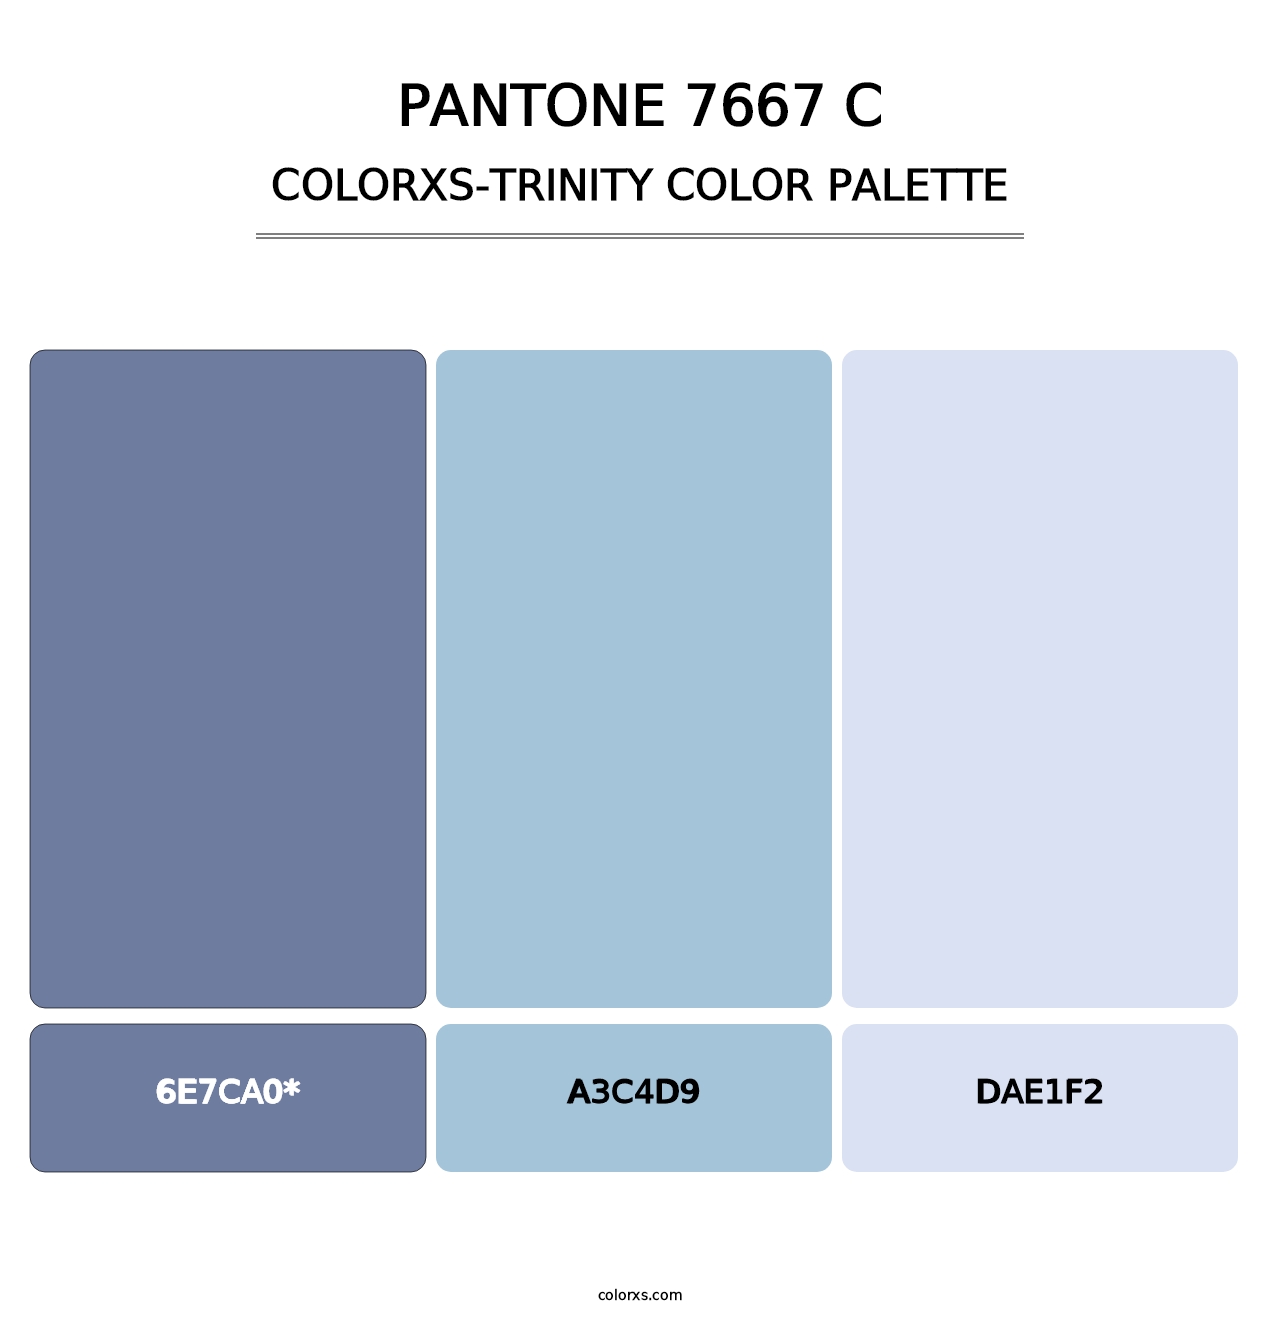 PANTONE 7667 C - Colorxs Trinity Palette